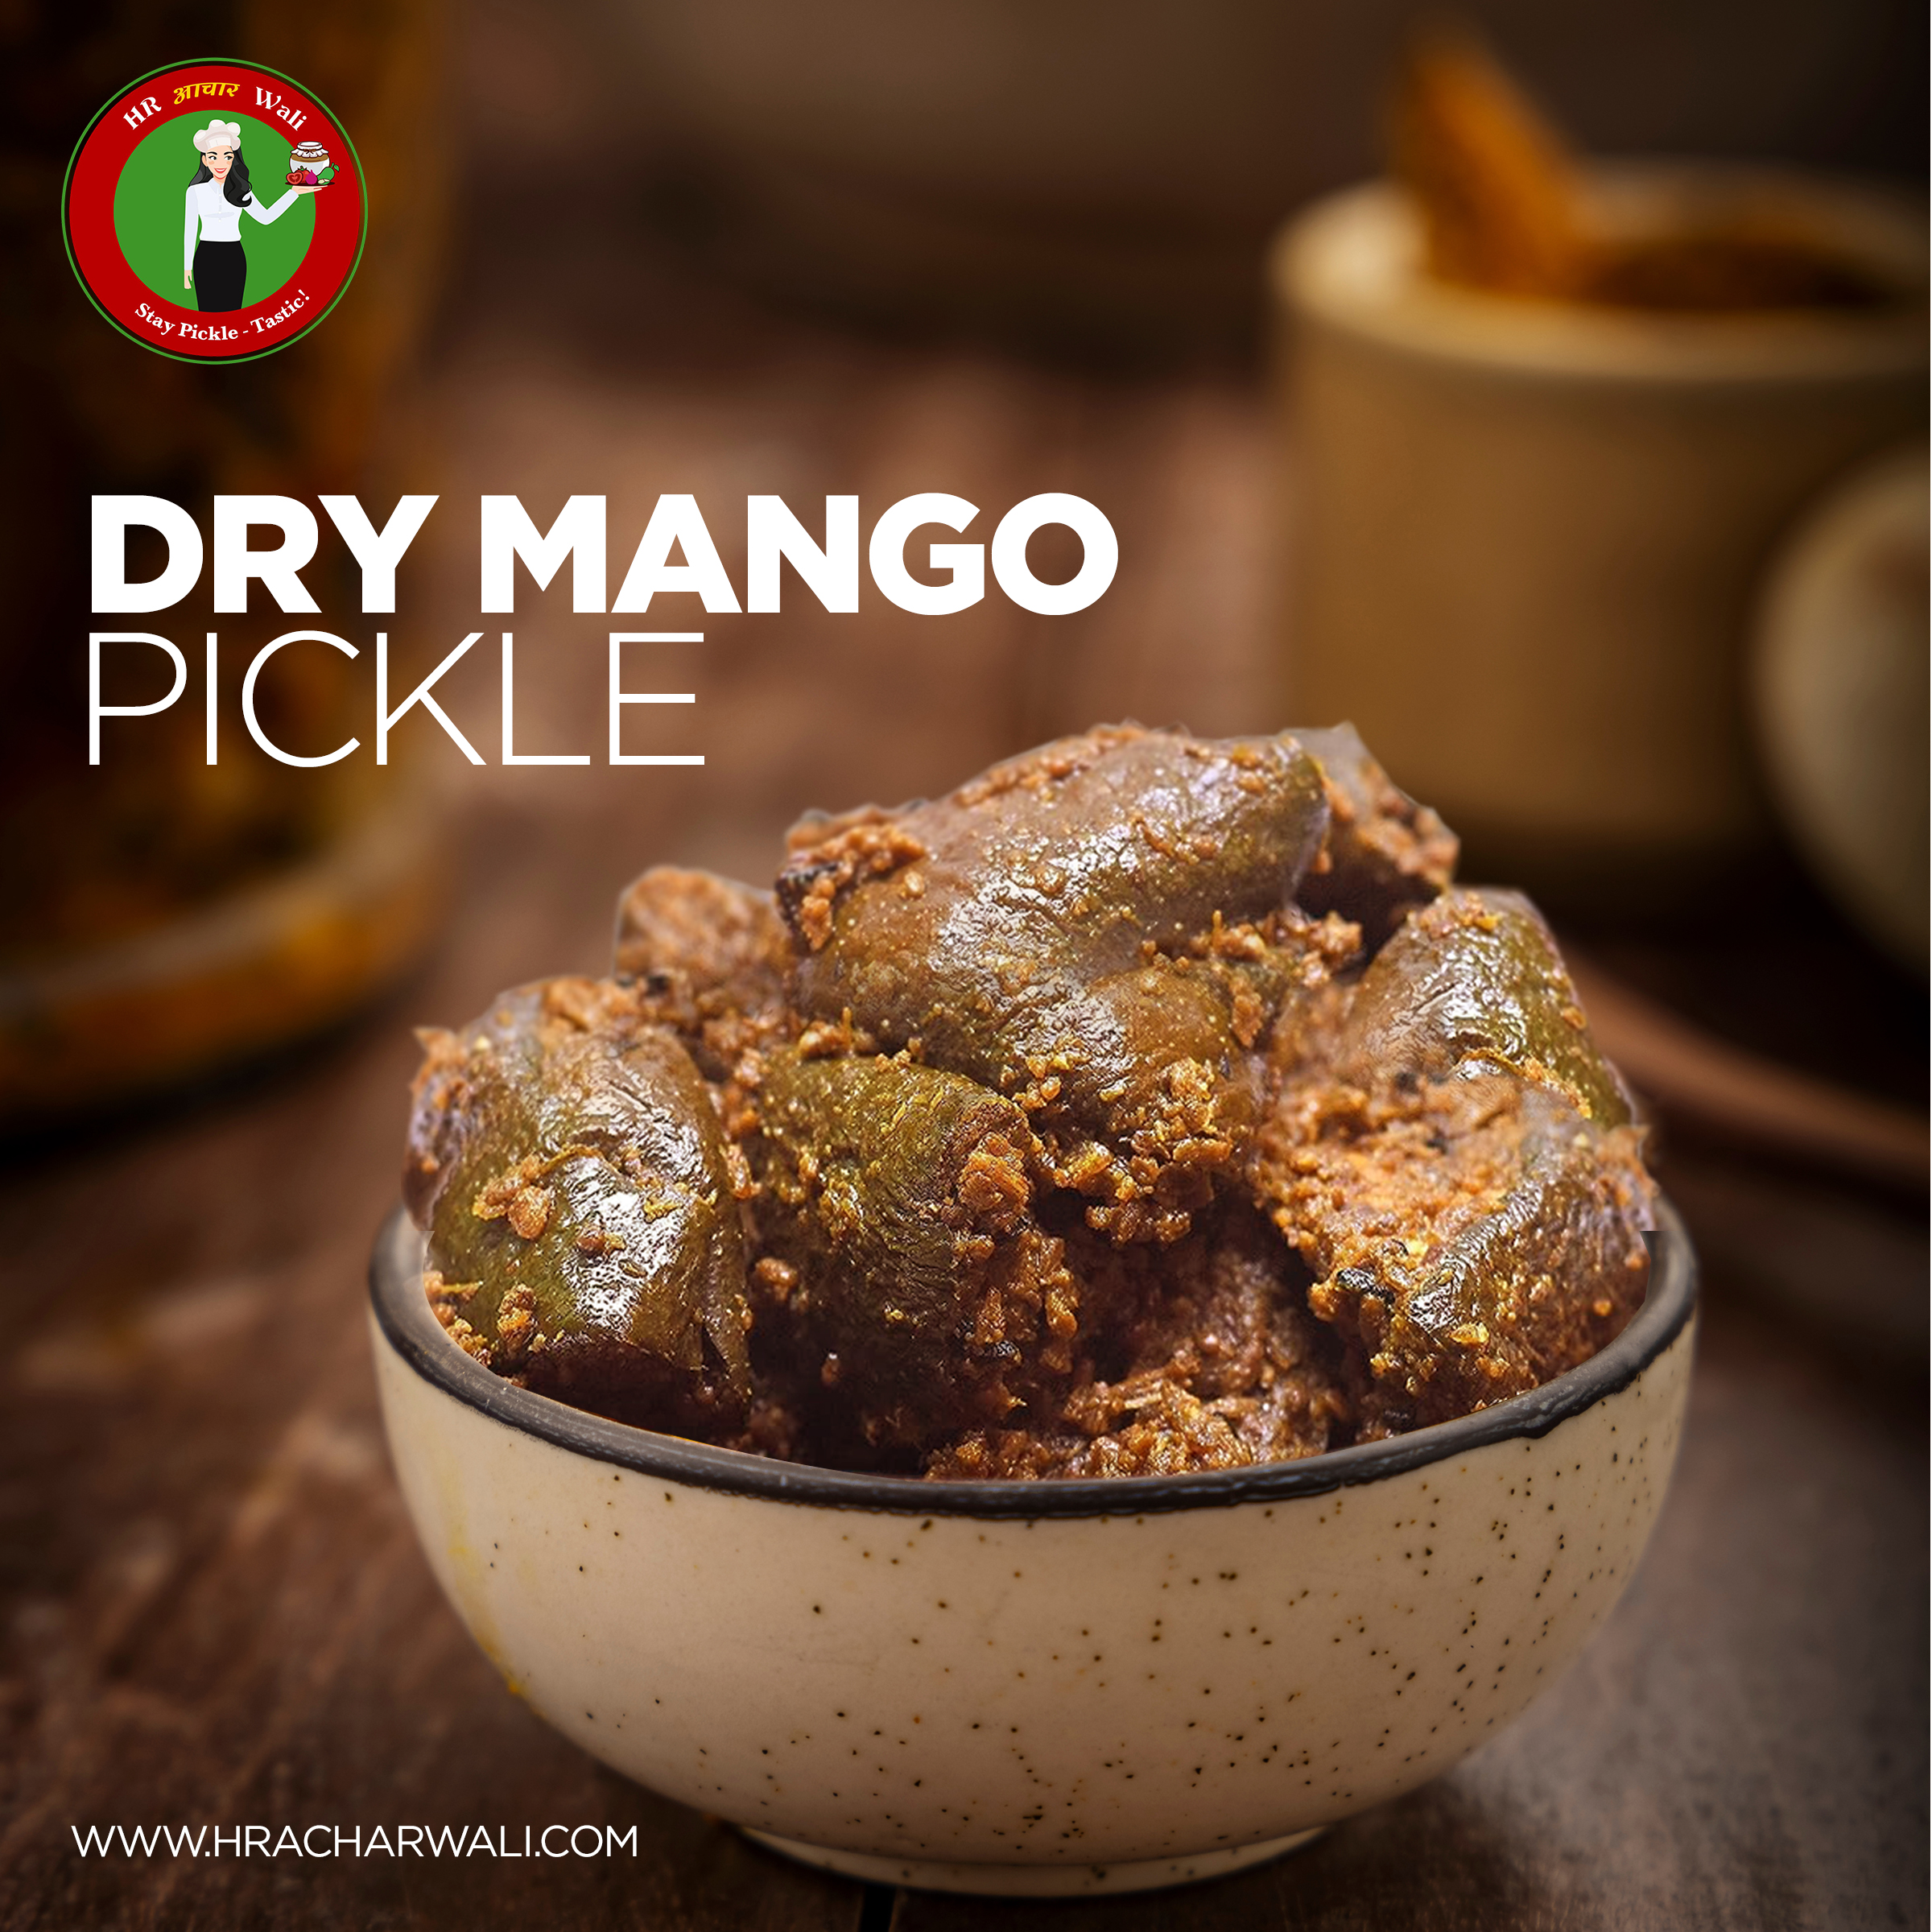 Dry mango Pickle